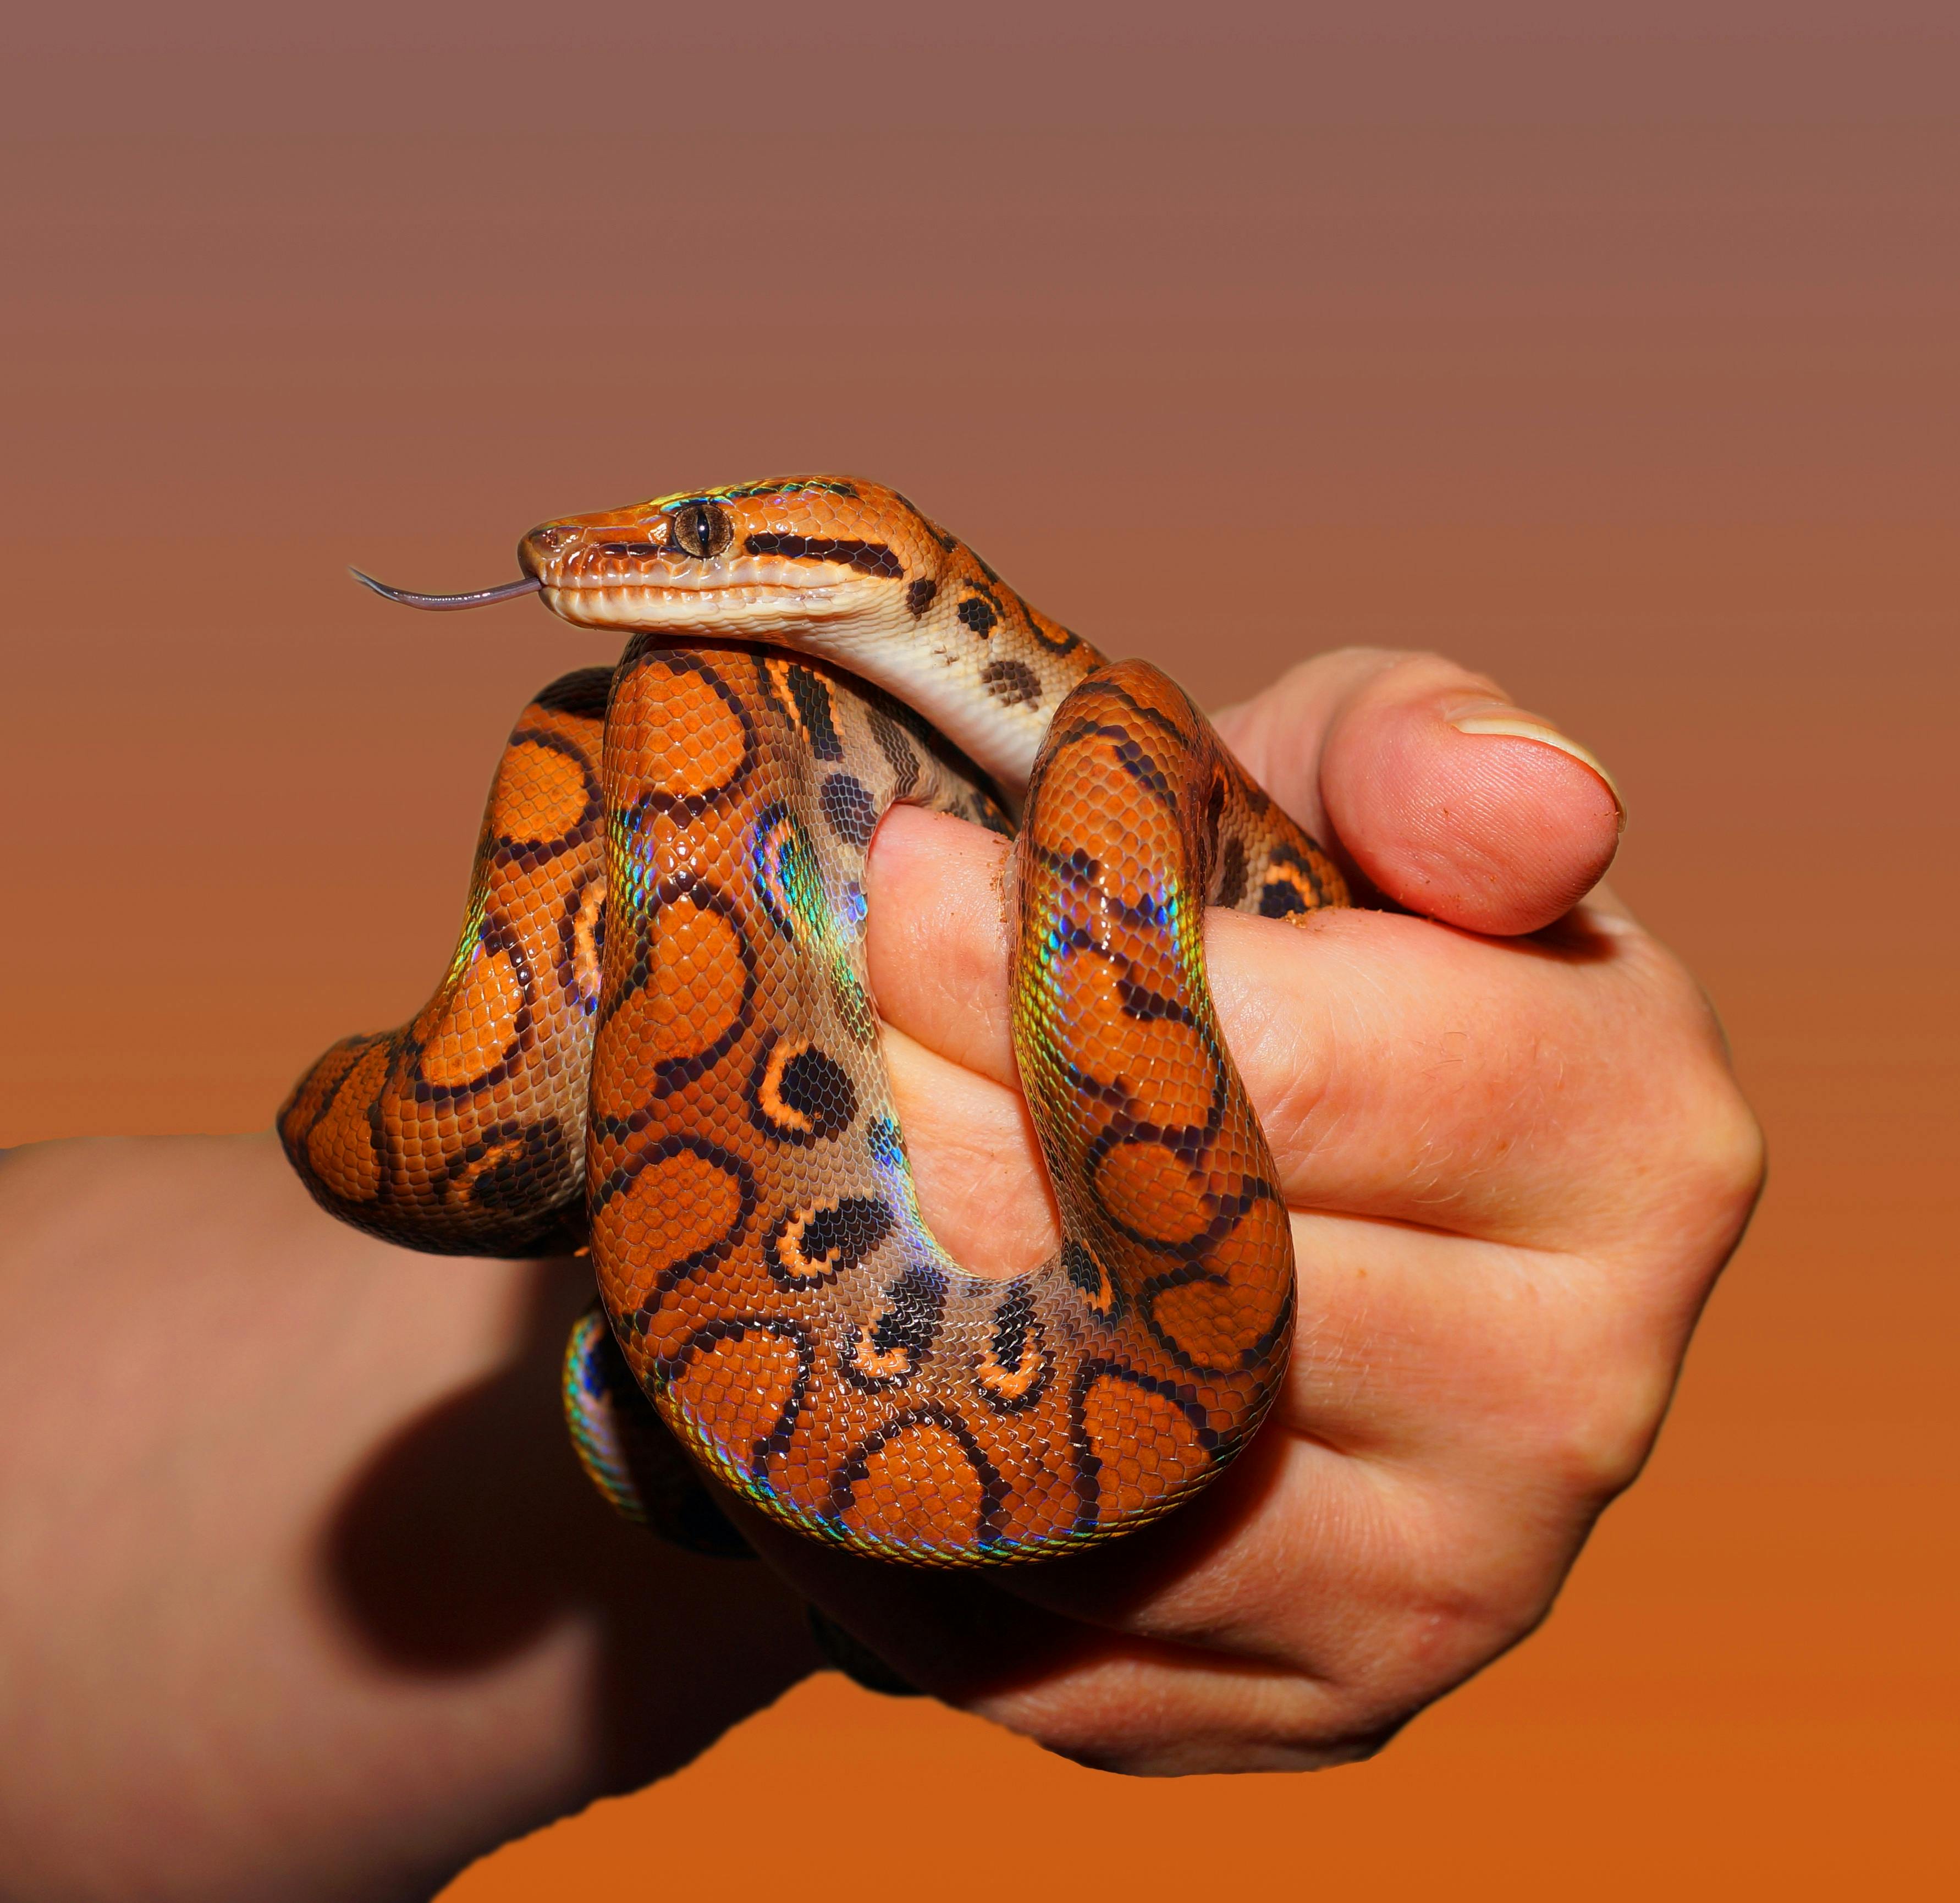 snake rainbow boa reptile scale.jpg?cs=srgb&dl=pexels pixabay 34426 Home